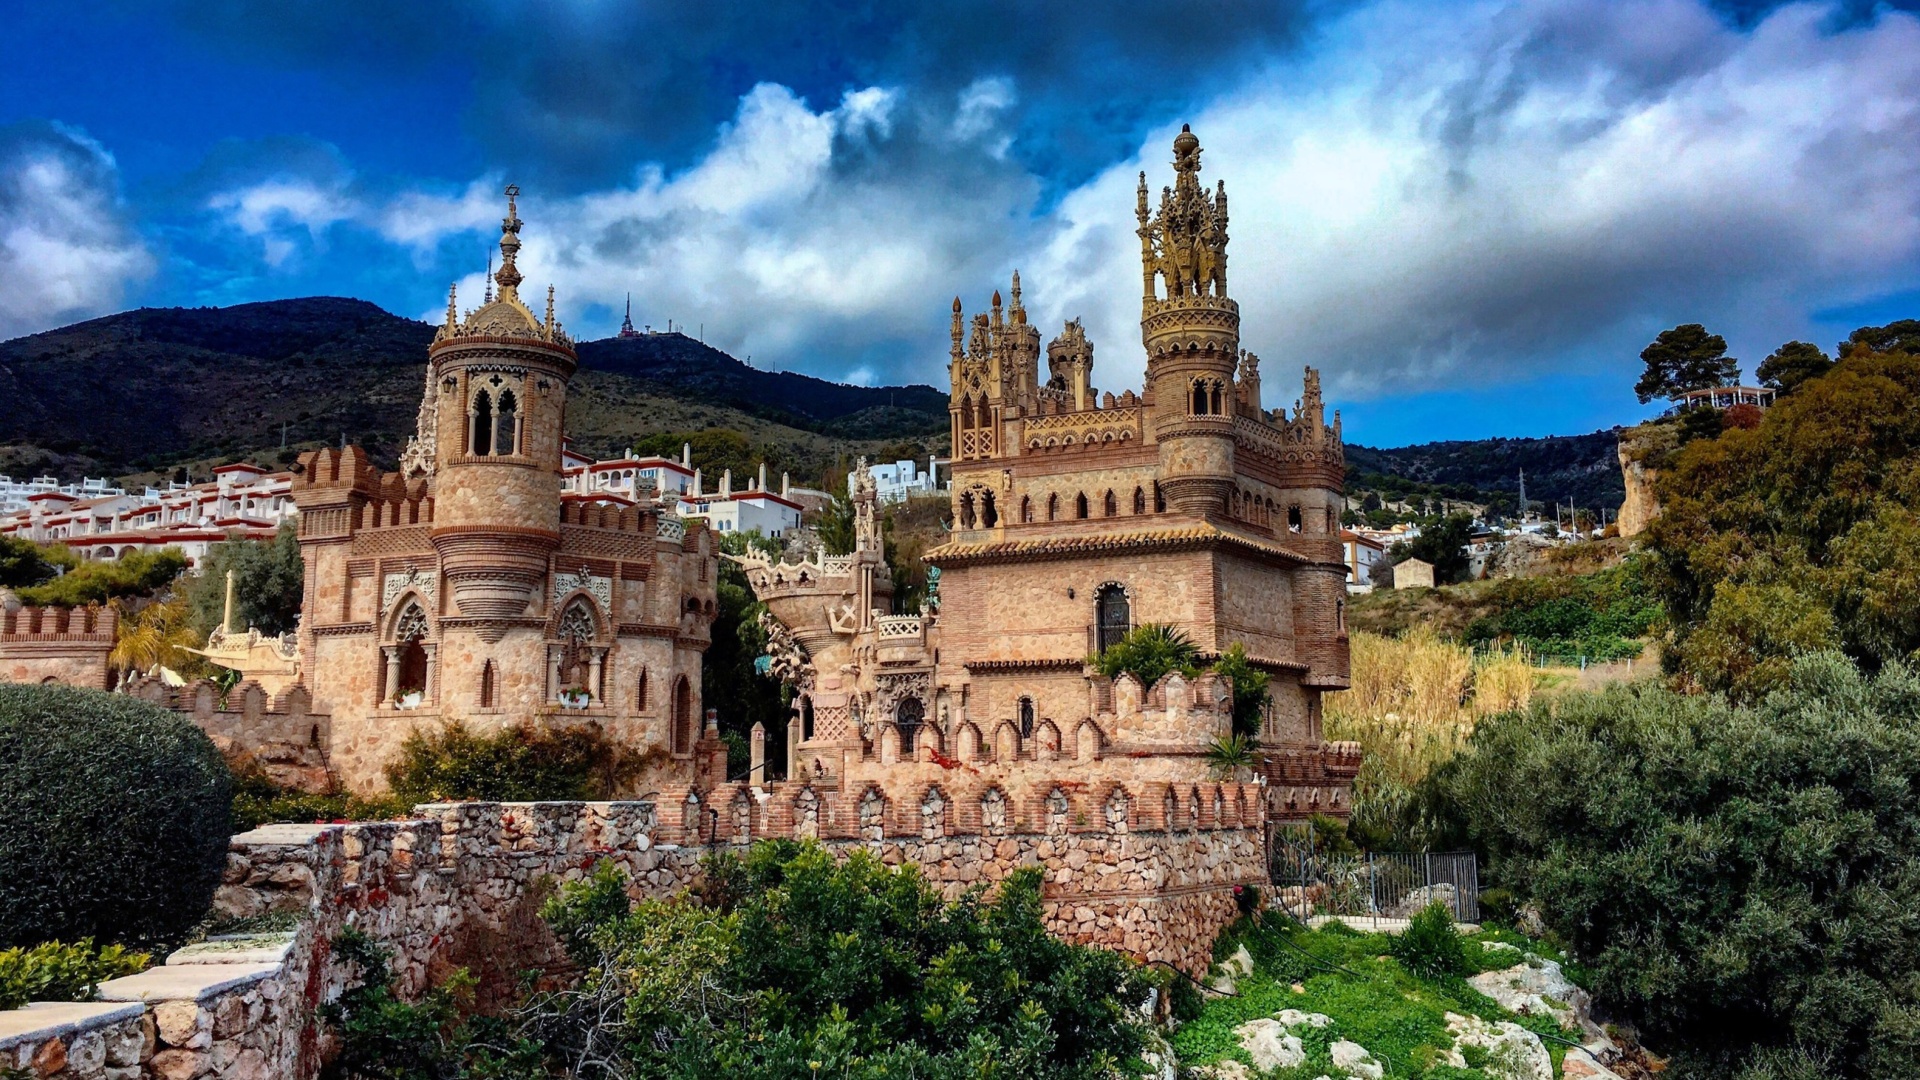 Обои Castillo de Colomares in Spain Benalmadena 1920x1080